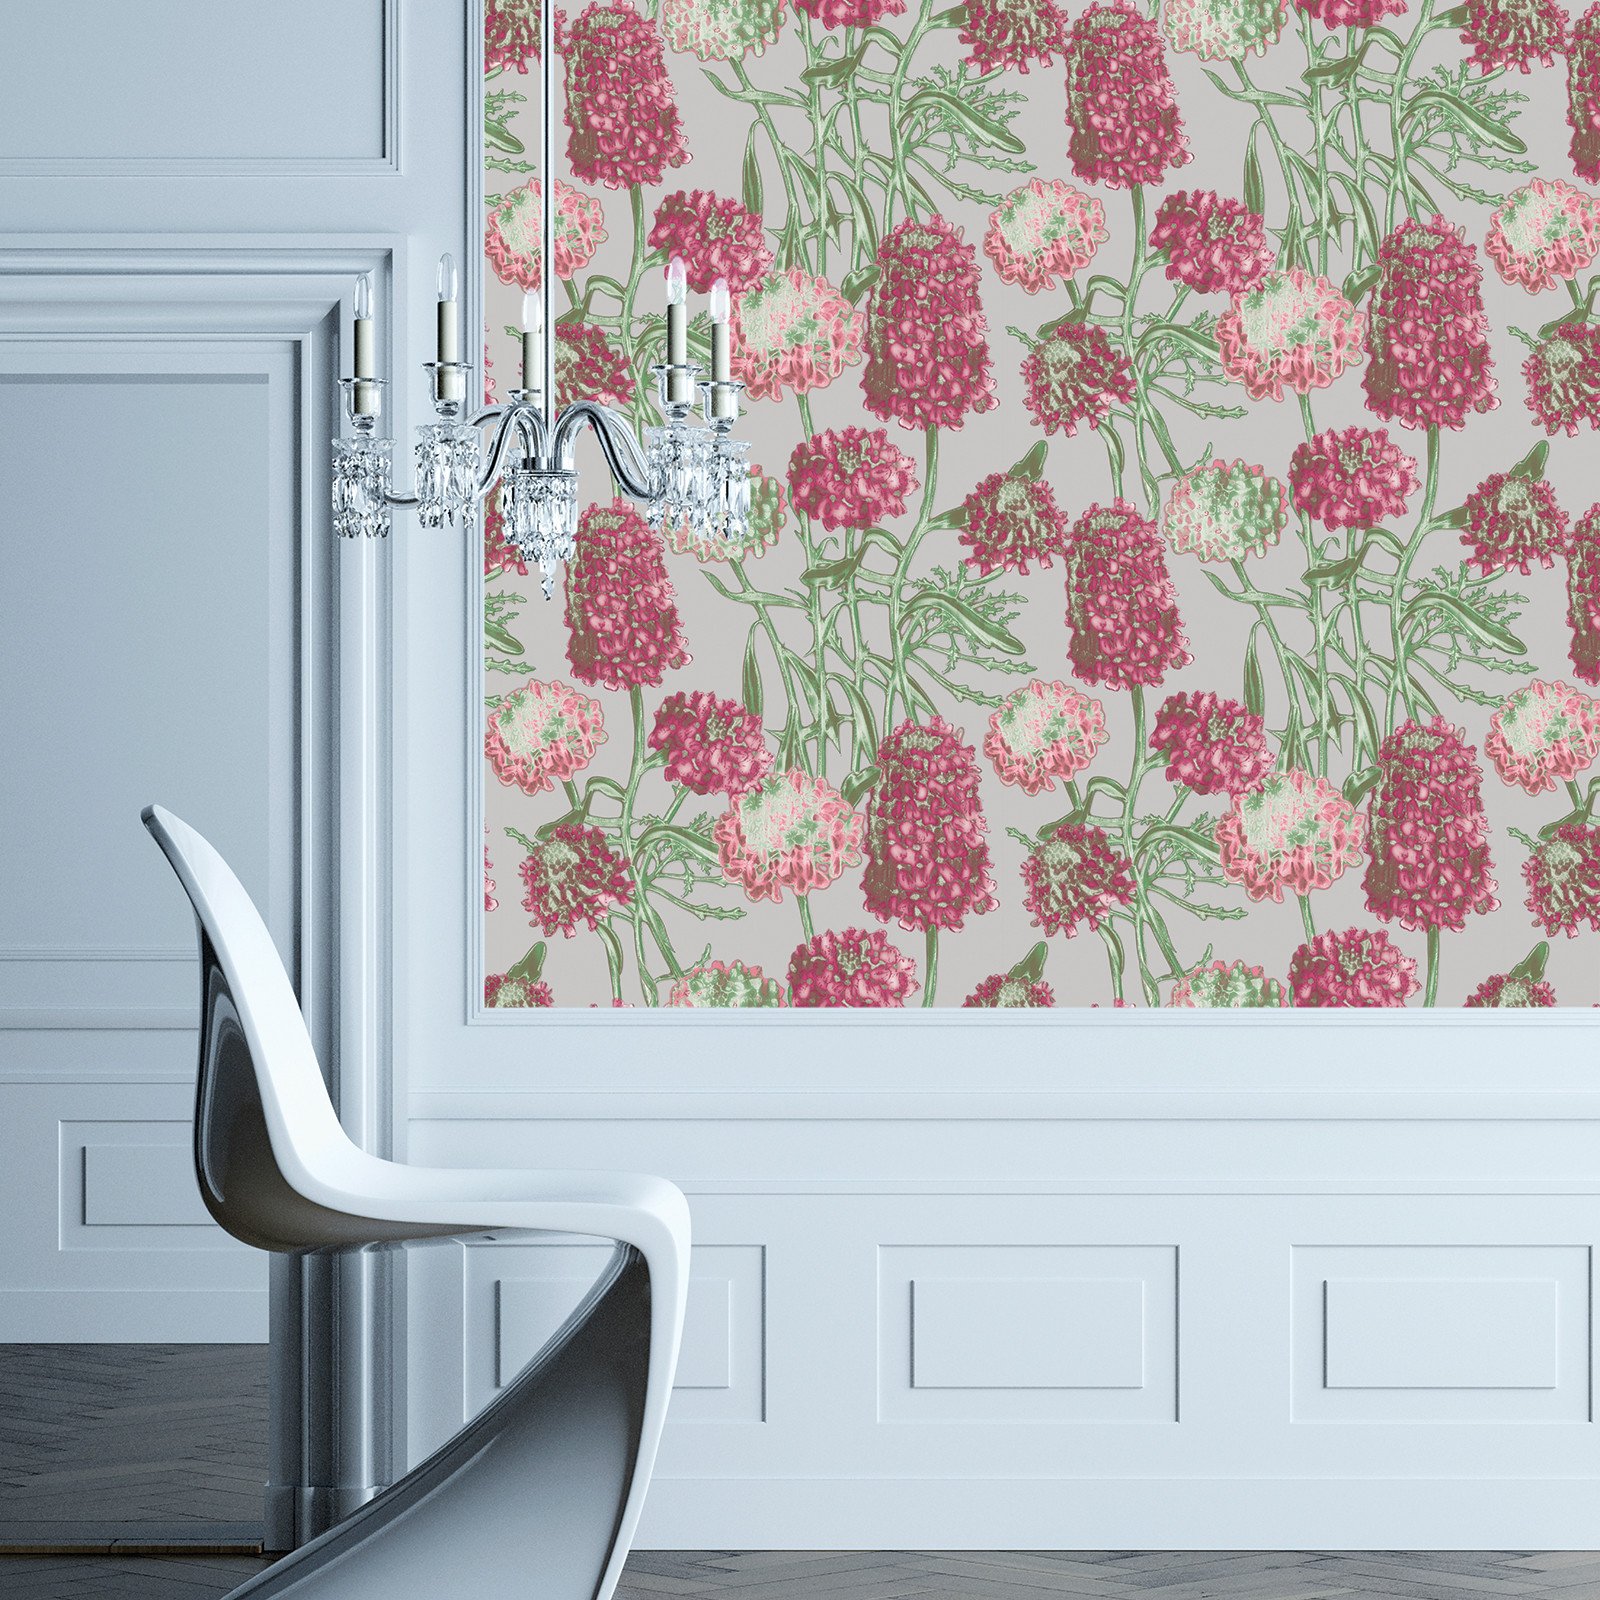 adhesive wallpaper design,wallpaper,pink,green,wall,wall sticker